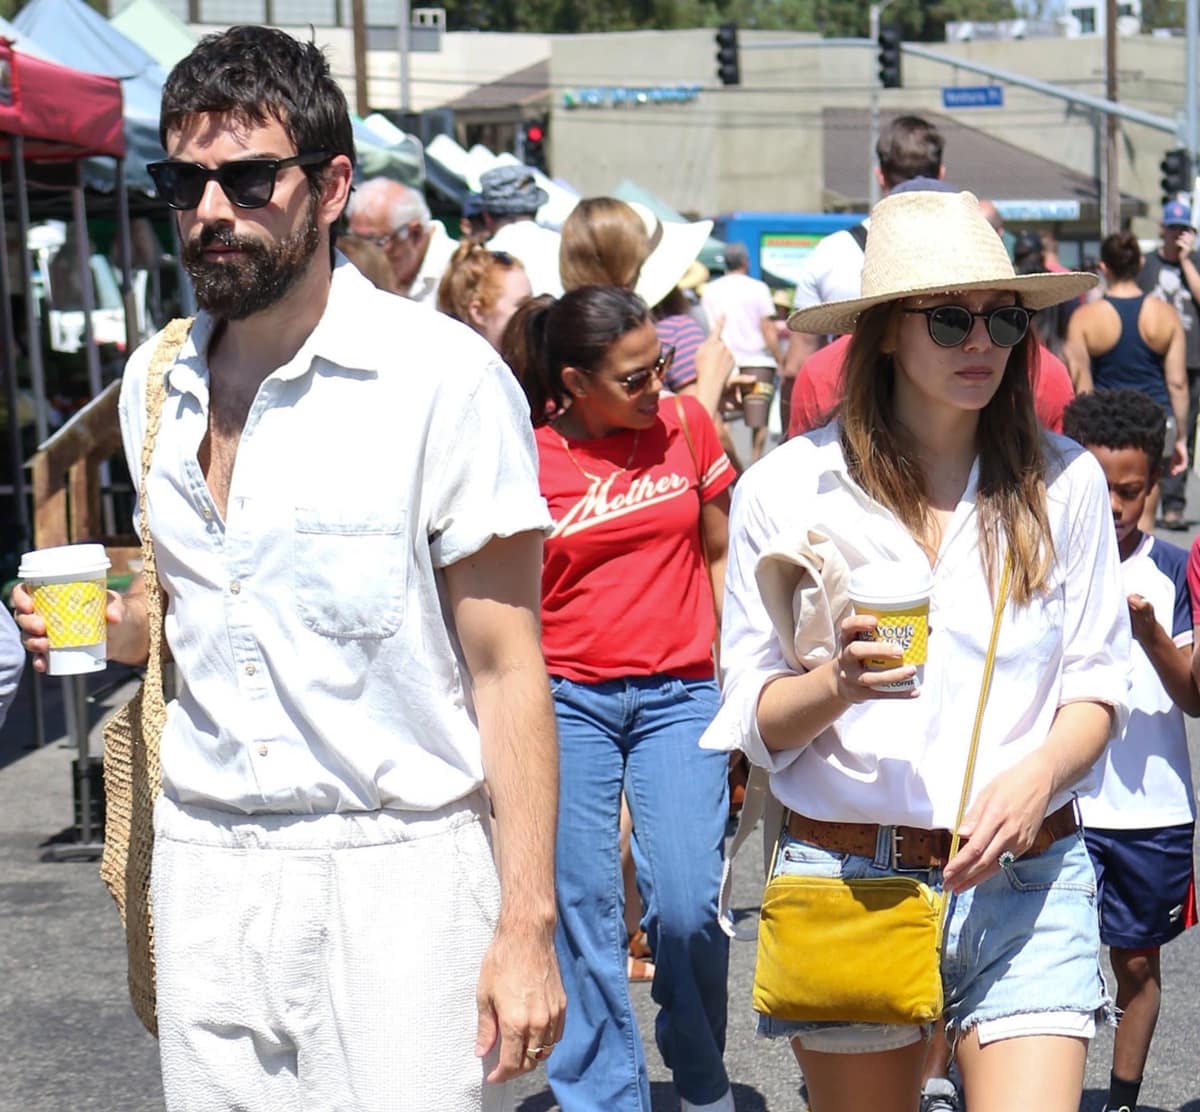 Elizabeth Olsen and her boyfriend Robbie Arnett step out to do some shopping at the farmer’s market